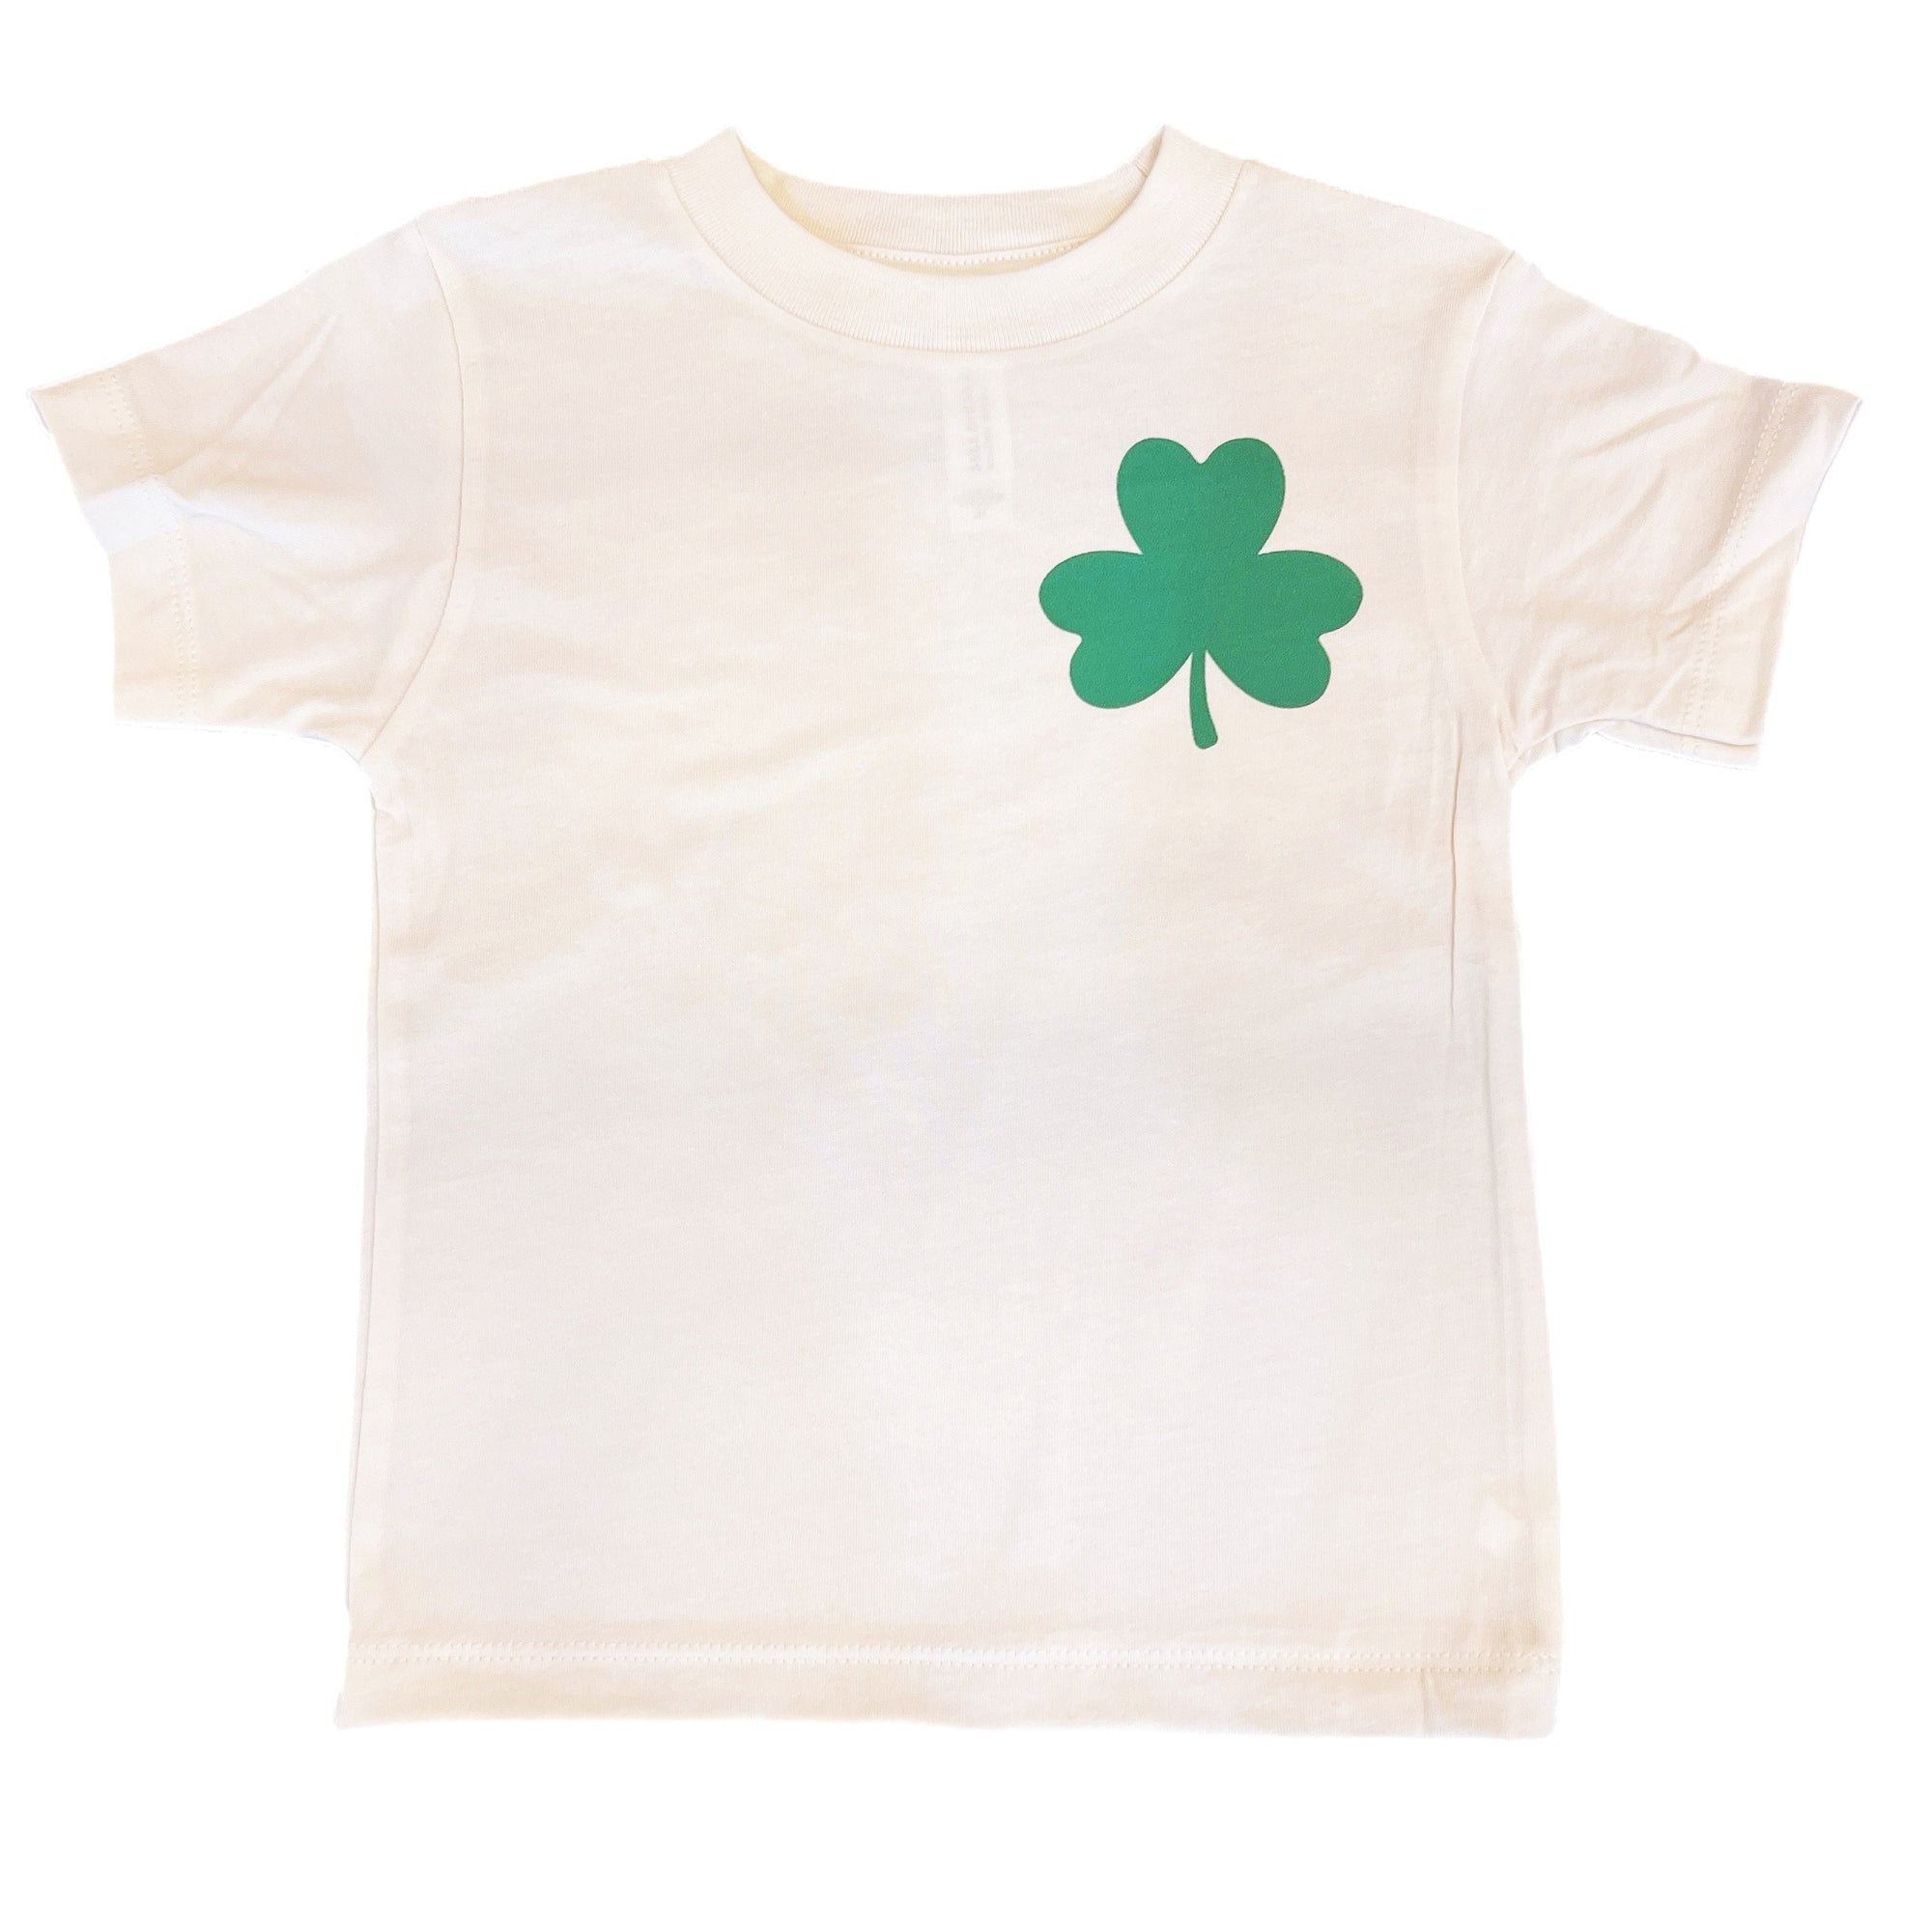 Prone to Shenanigans St. Patrick's Day T-Shirt